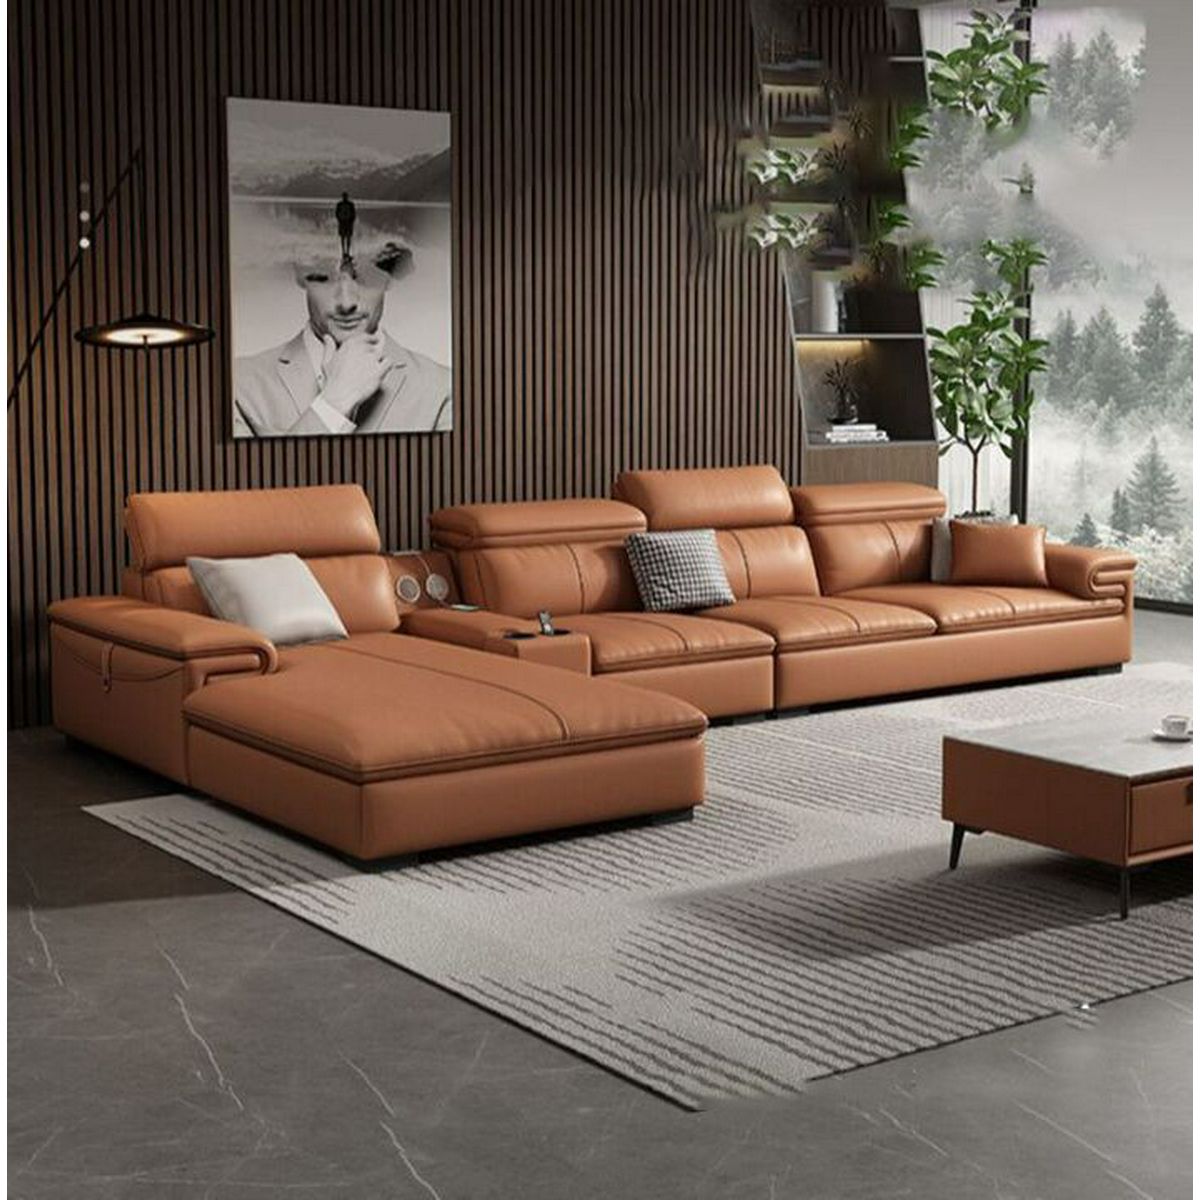 Bunise โซฟารับแขก ห้องนั่งเล่น Luxury sofa ตัว l USB Charging Leather Sofa  400 x 172 x 90 ซม BU14 149.9 400*172*90CM(Right) genuineLeather